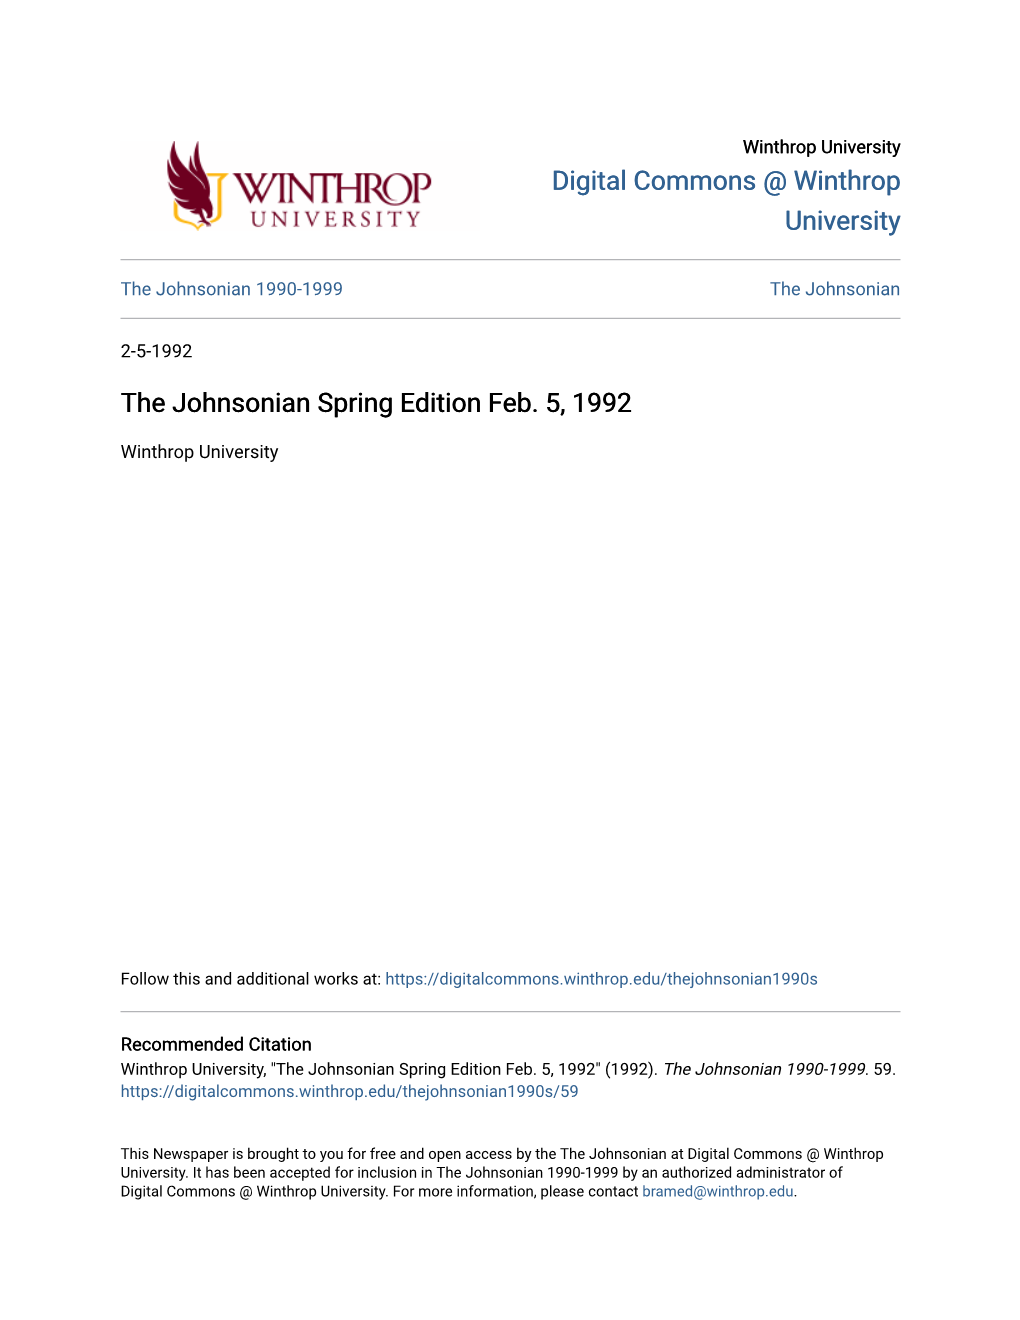 The Johnsonian Spring Edition Feb. 5, 1992